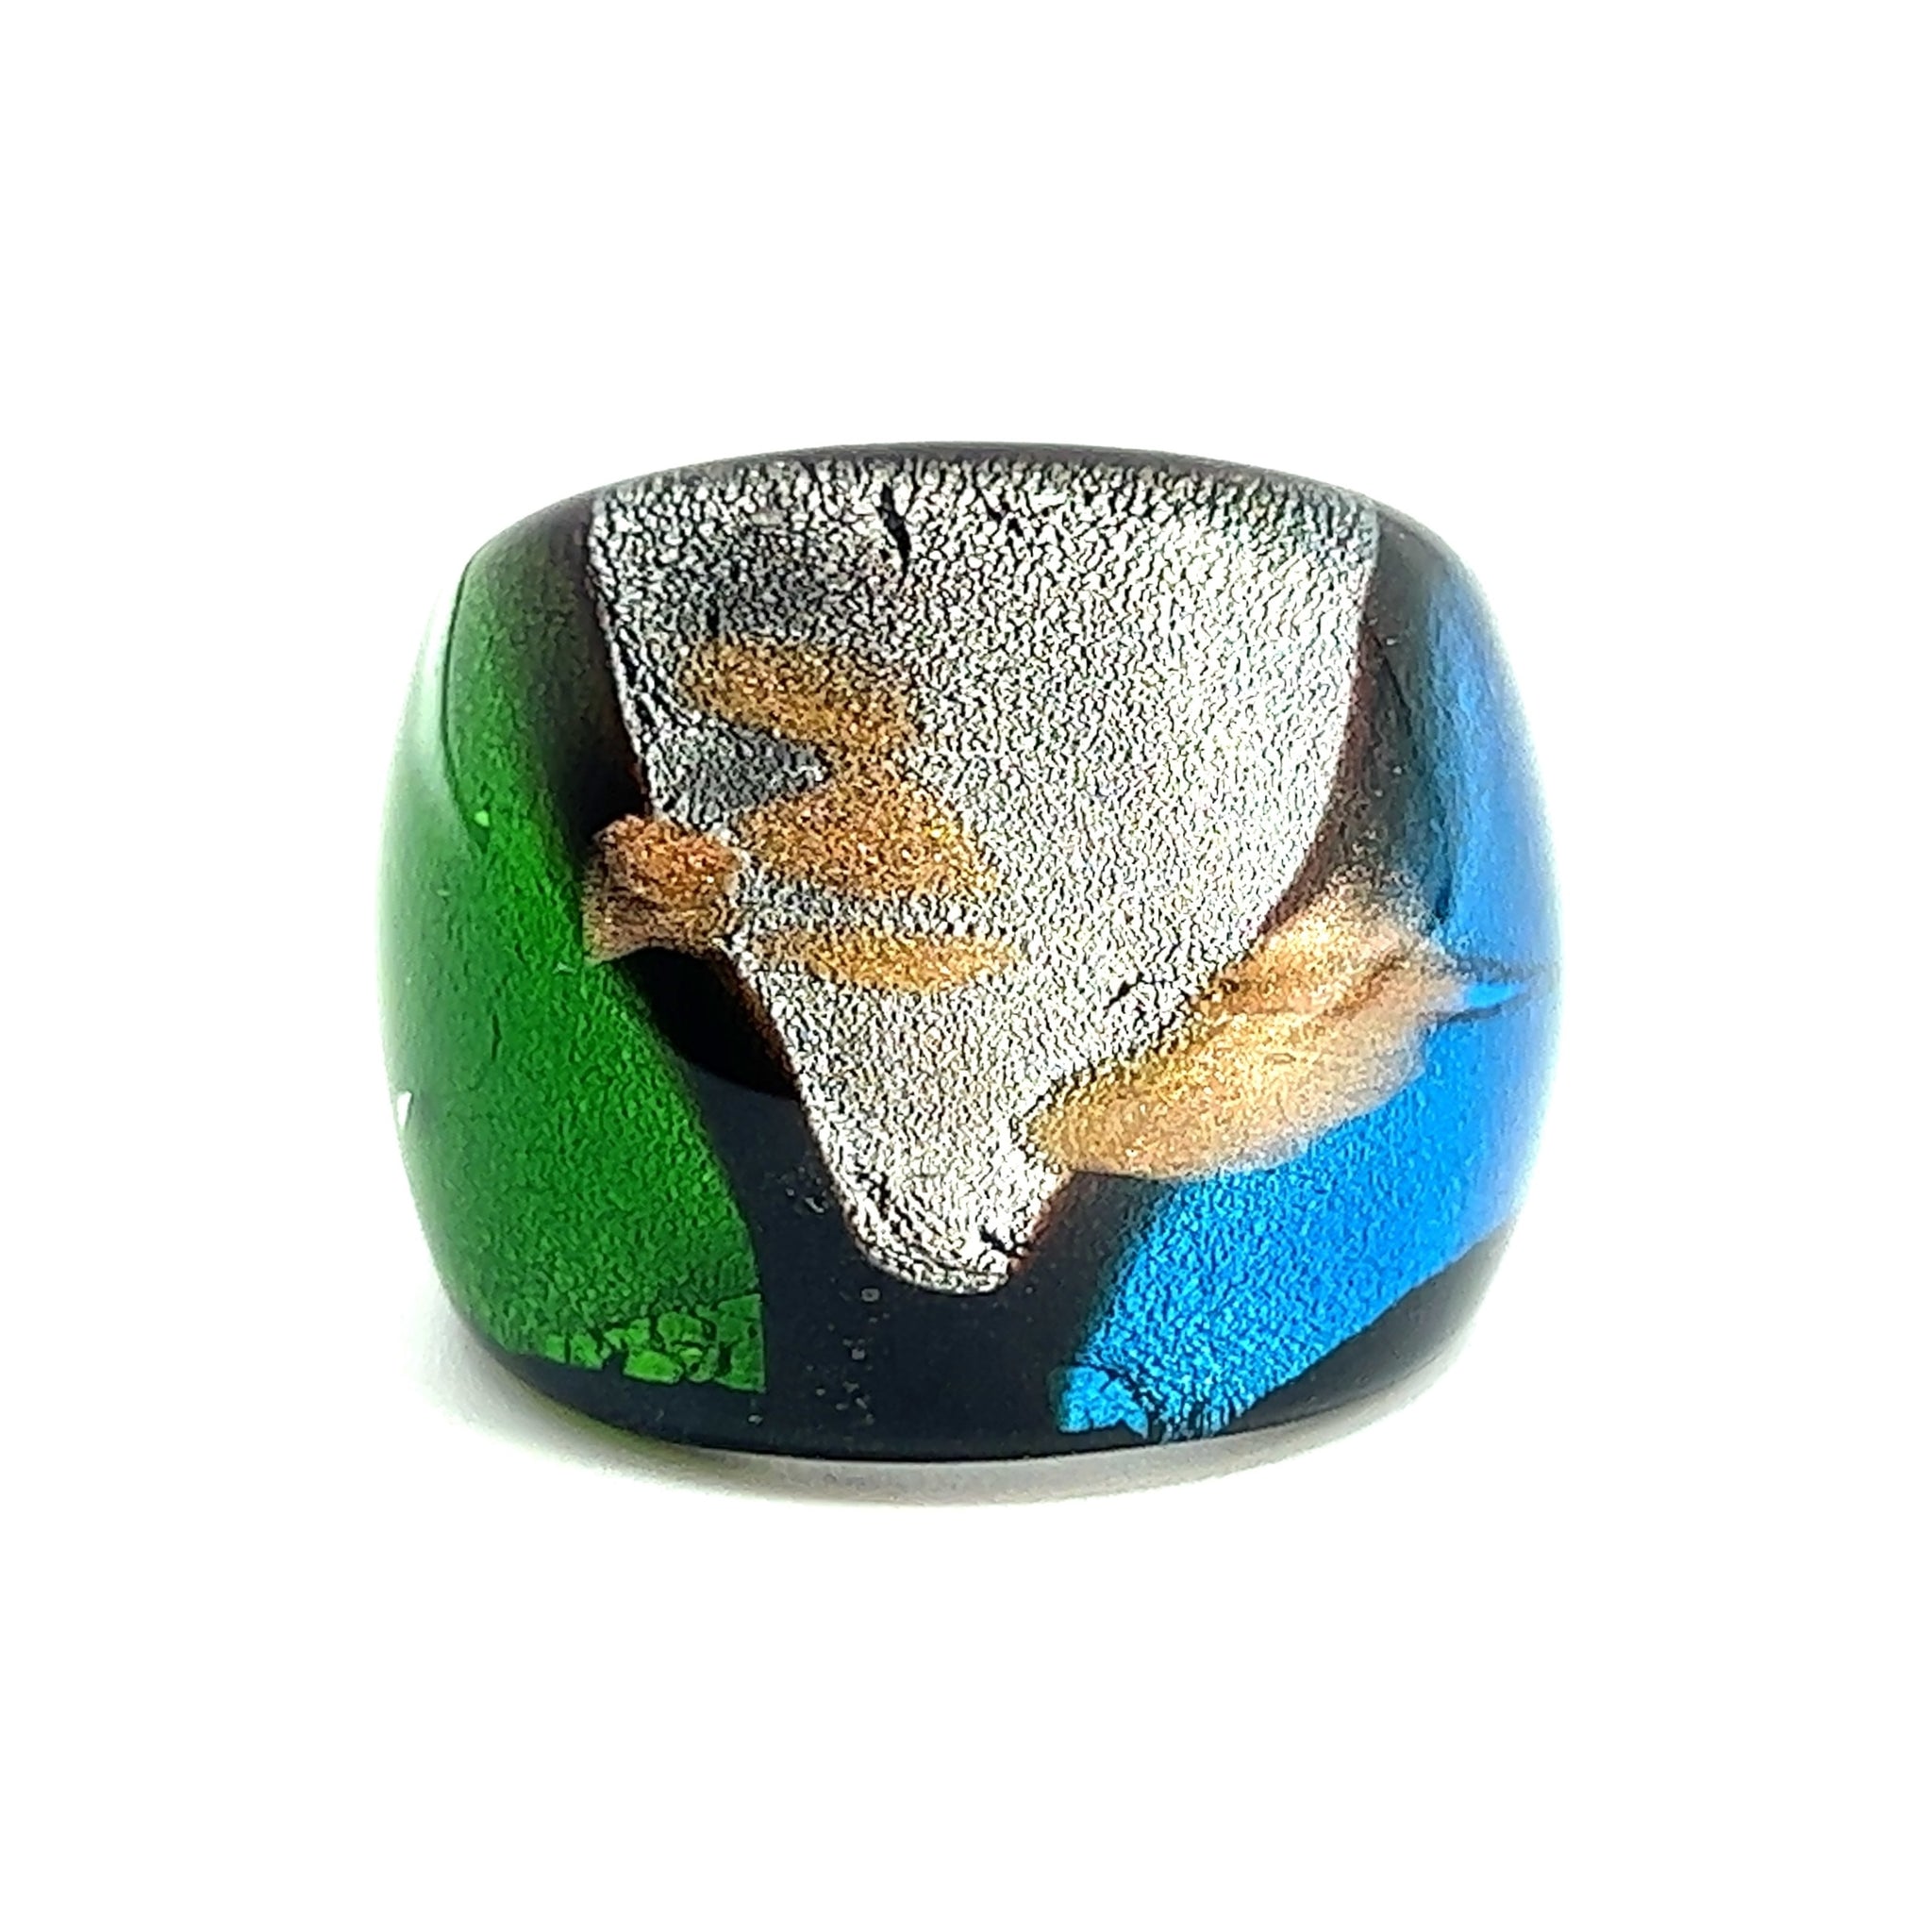 Handmade Glass Acrylic Ring Artistry with Radiance Aqua Infinity Band